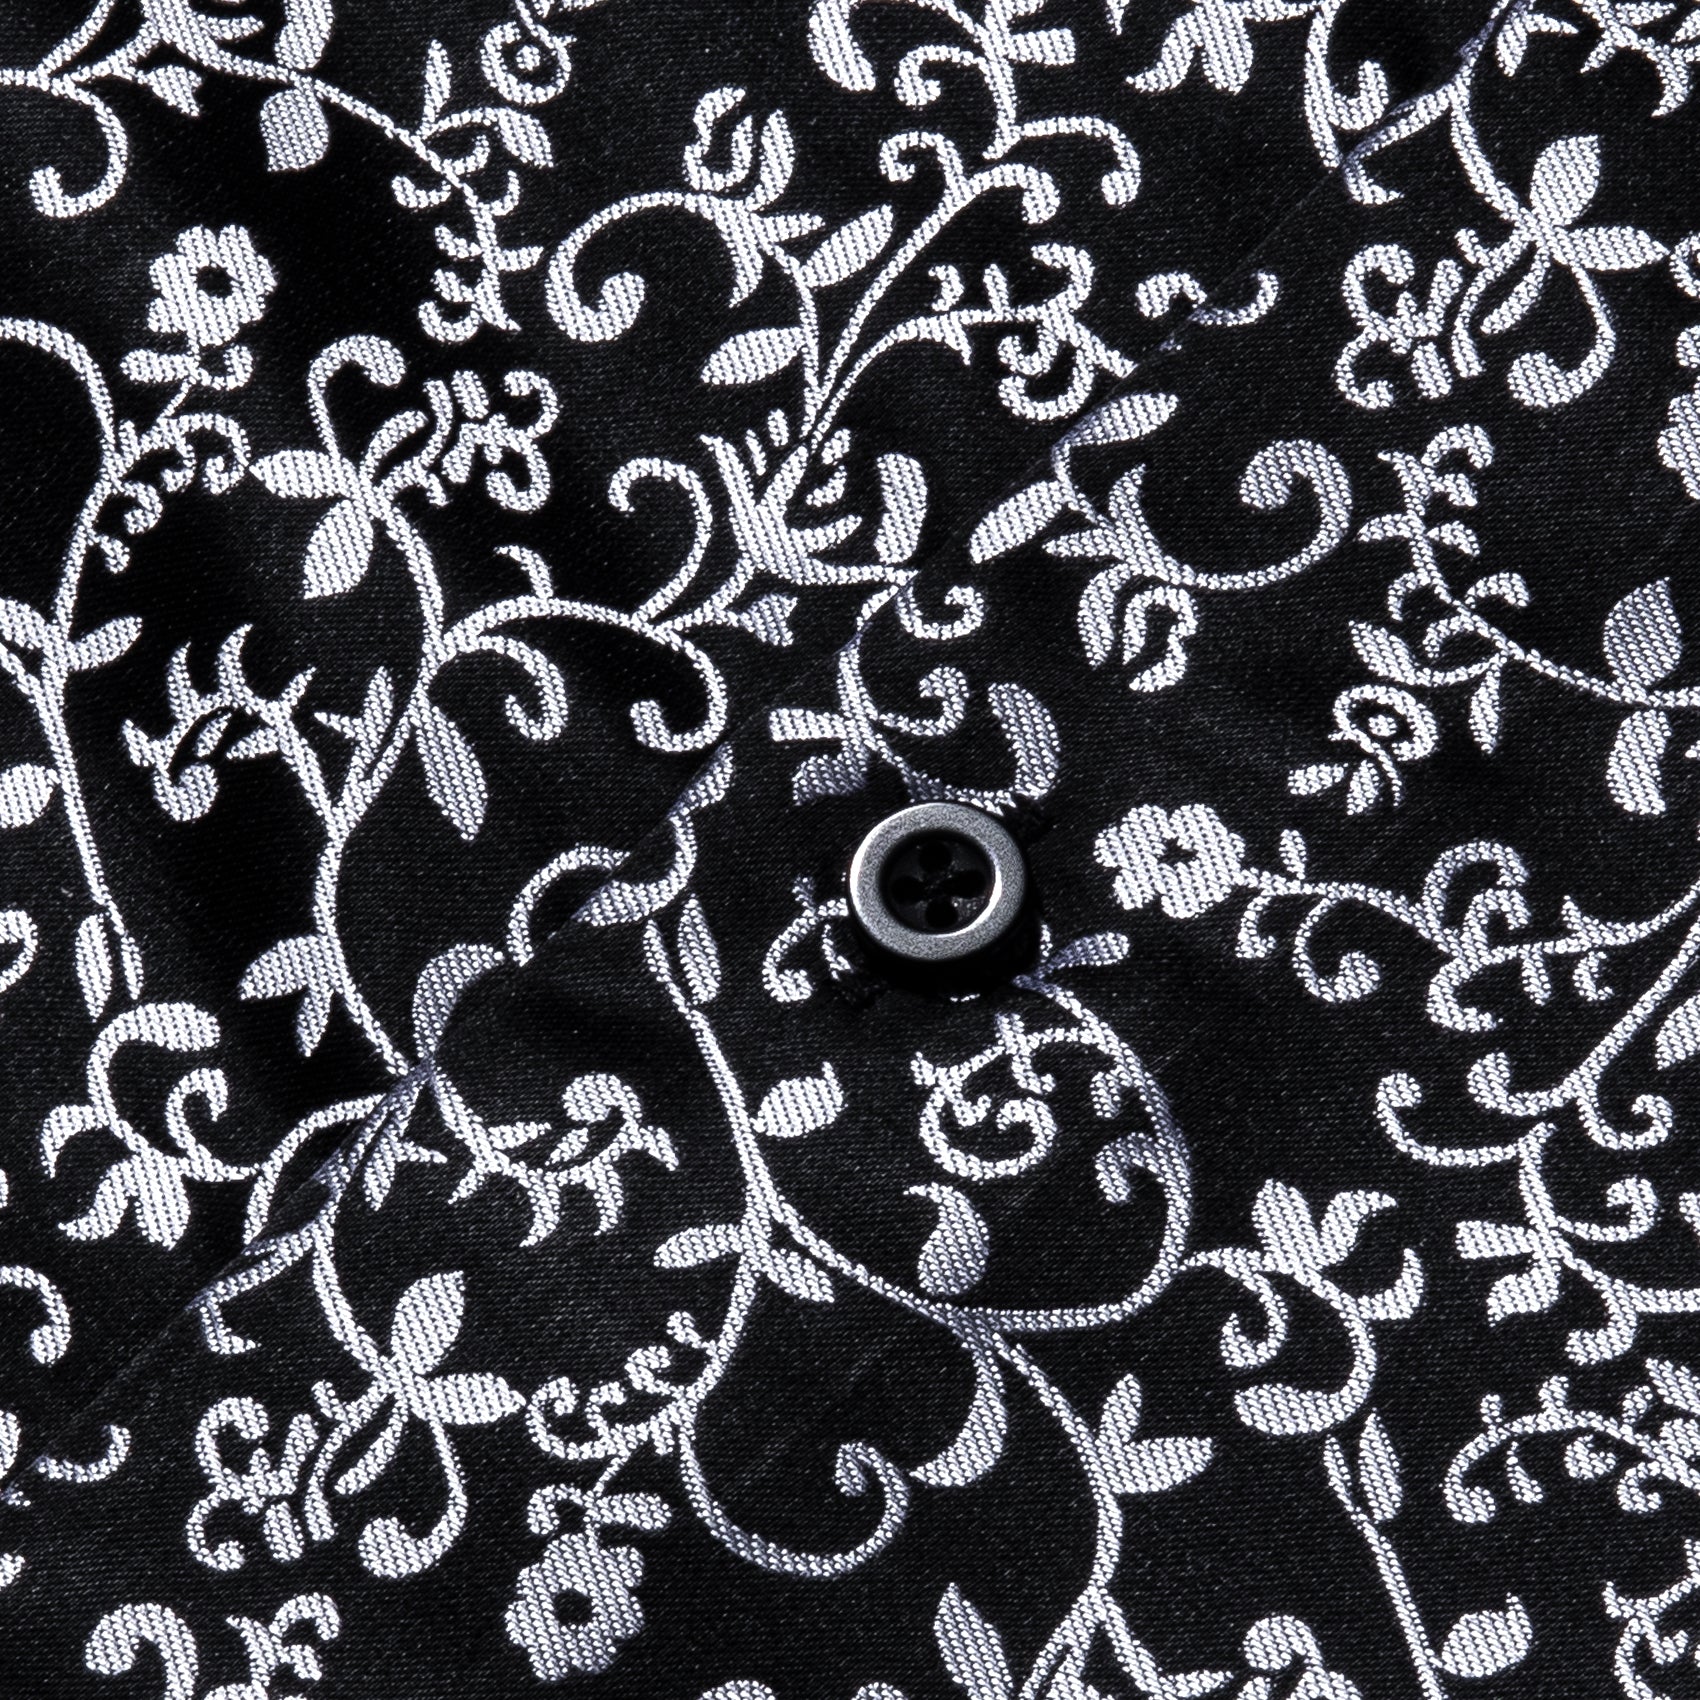 Barry.wang Button Down Shirt Black White Floral Silk Long Sleeve Shirt